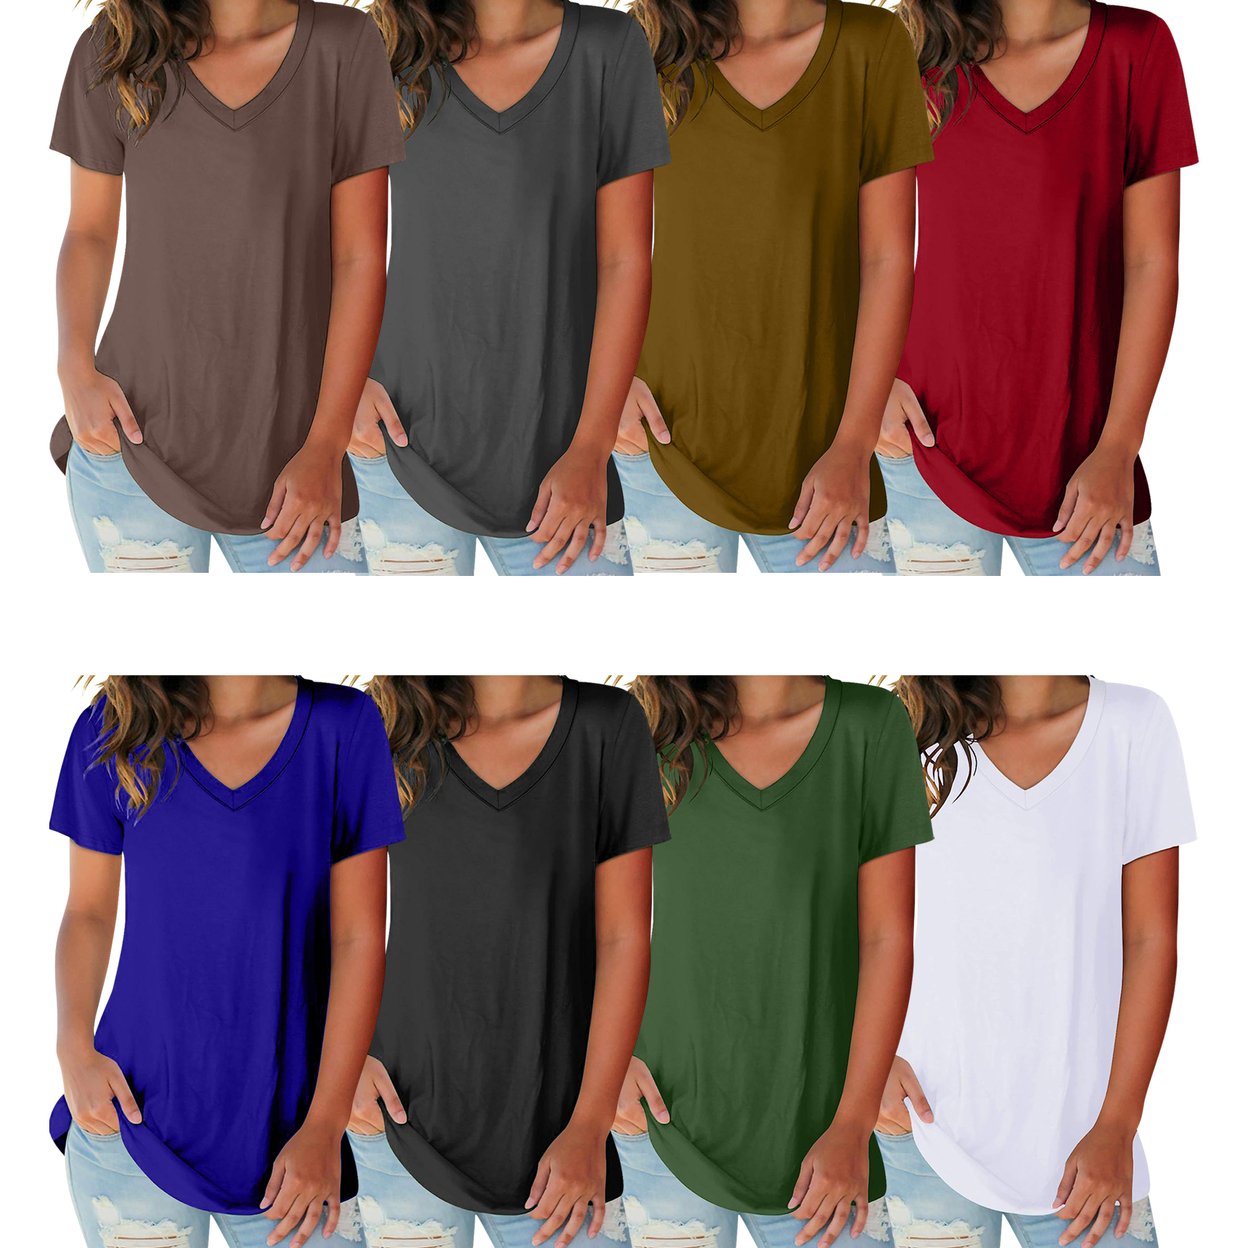 3-Pack: Women's Ultra Soft Smooth Cotton Blend Basic V-Neck Short Sleeve Shirts - Black, White, Grey, Large